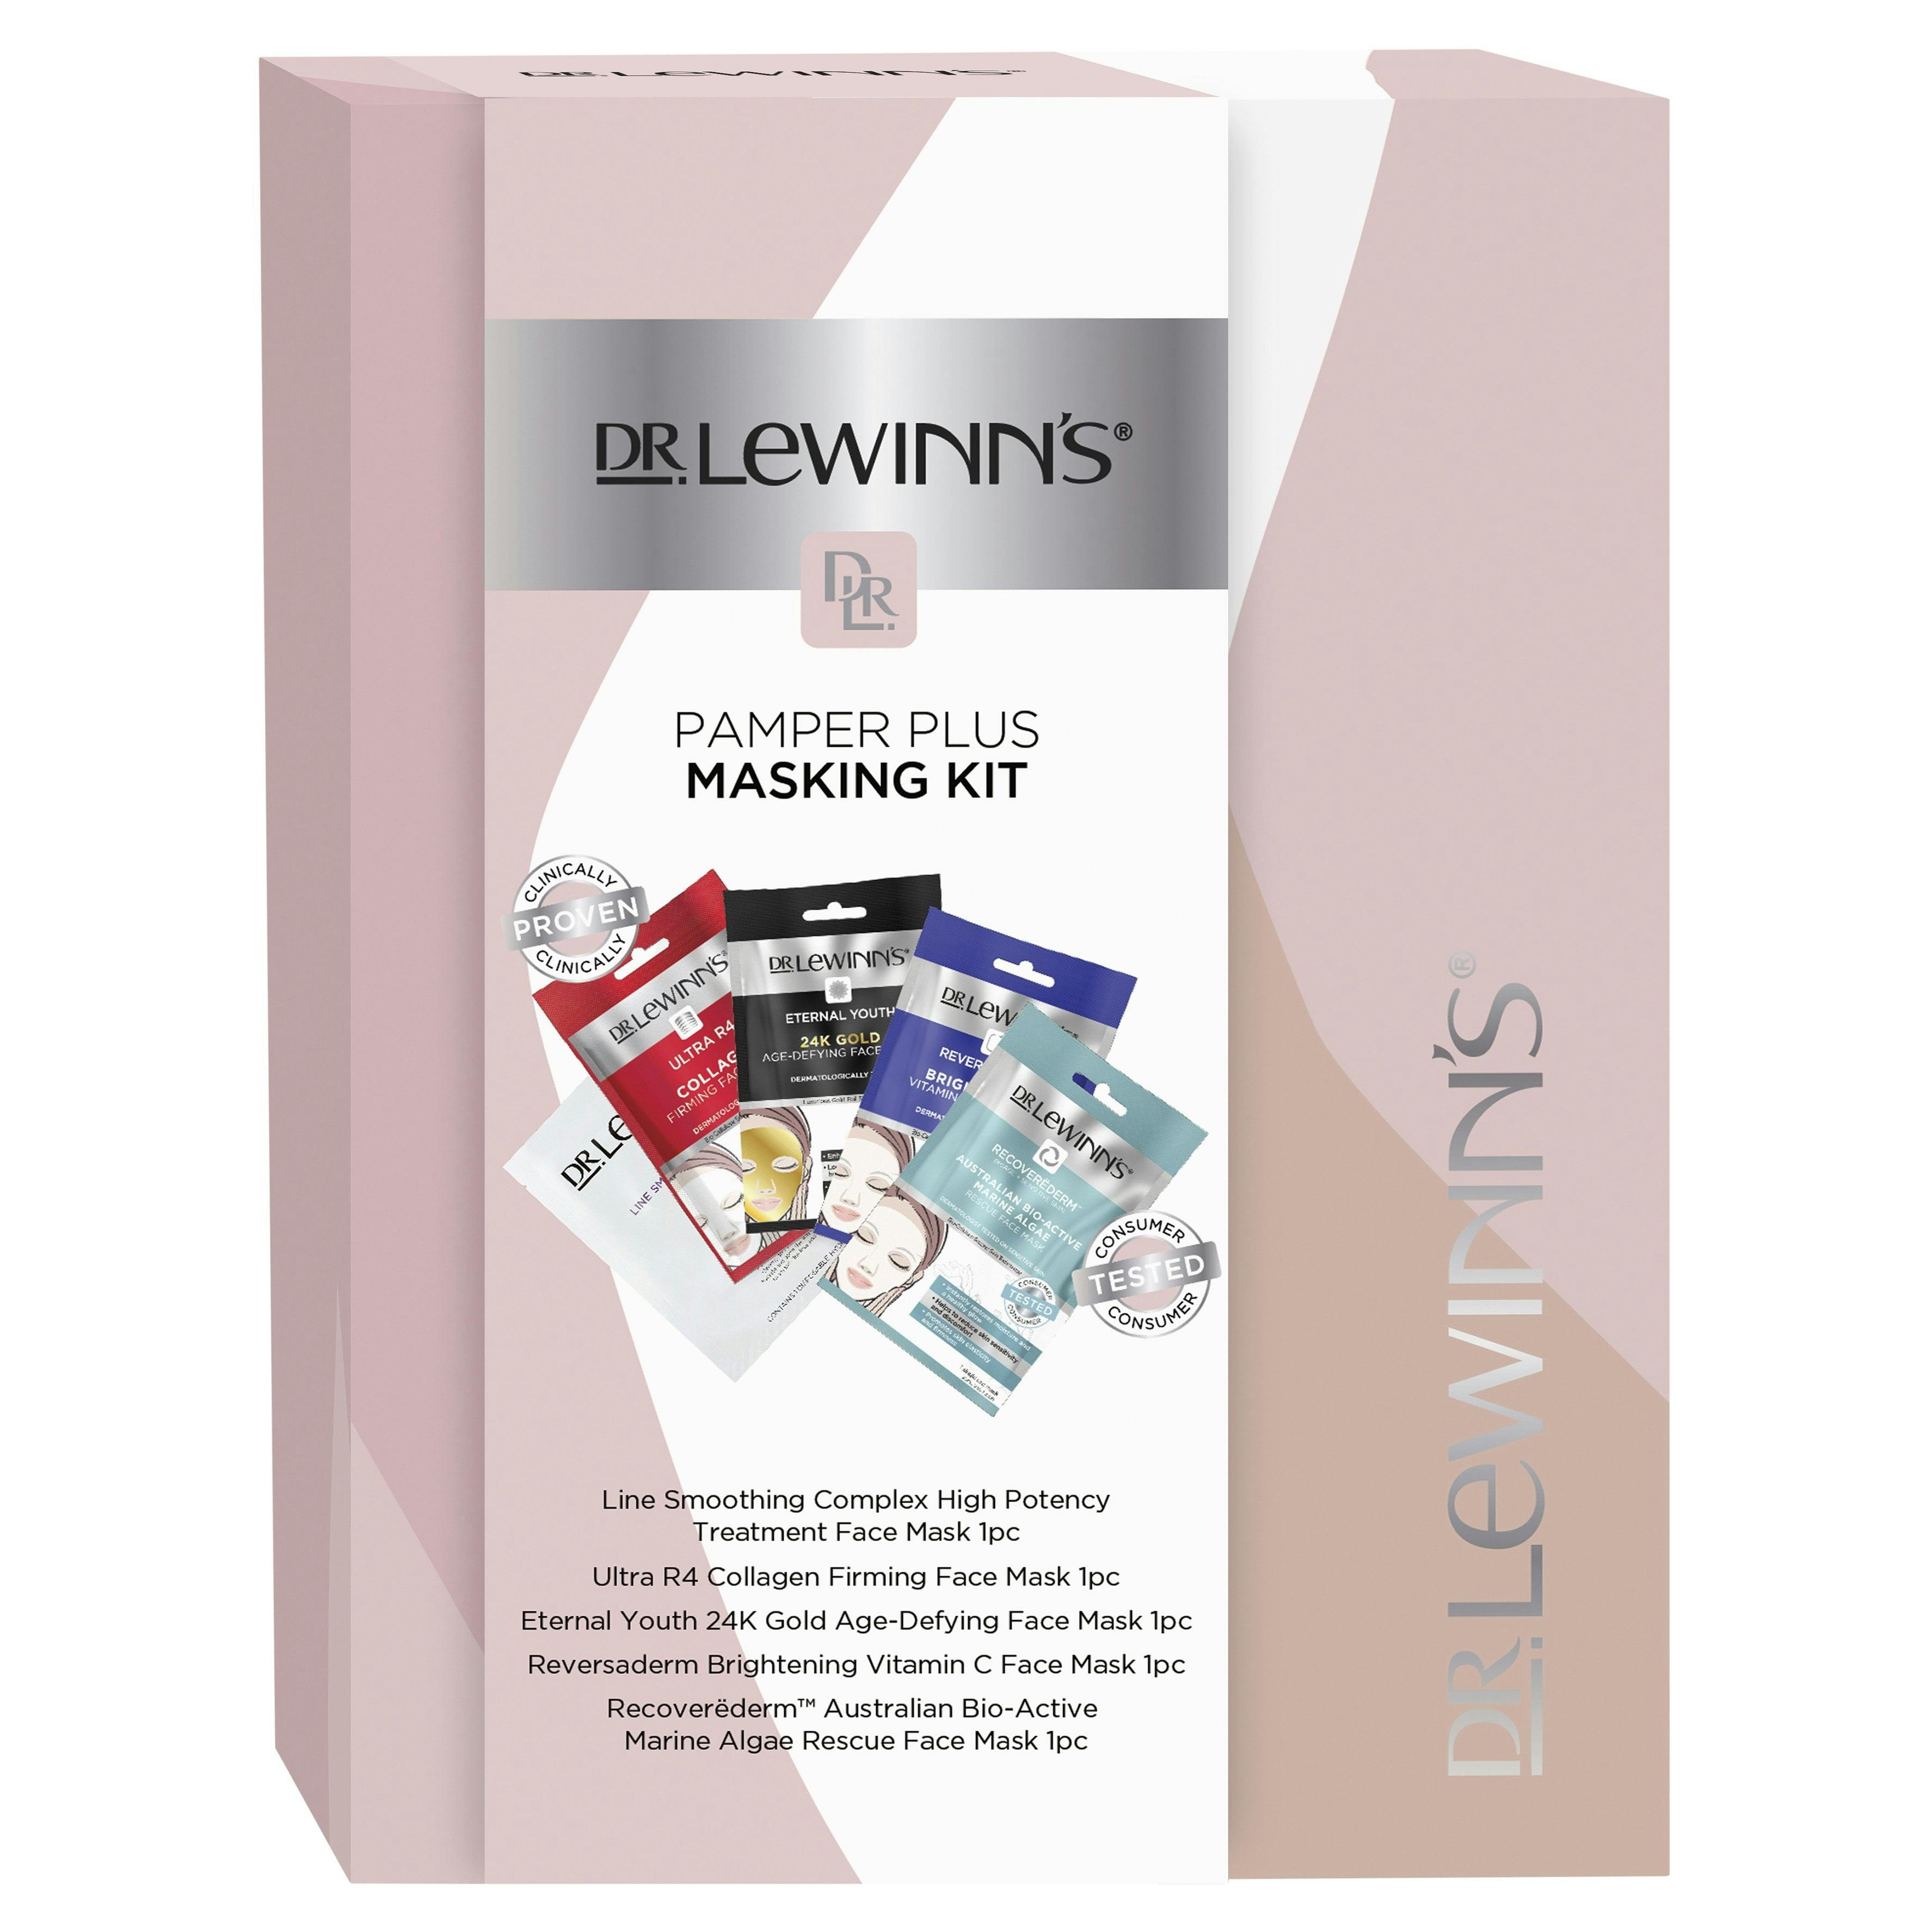 Dr. LeWinn's Pamper Plus Masking Kit